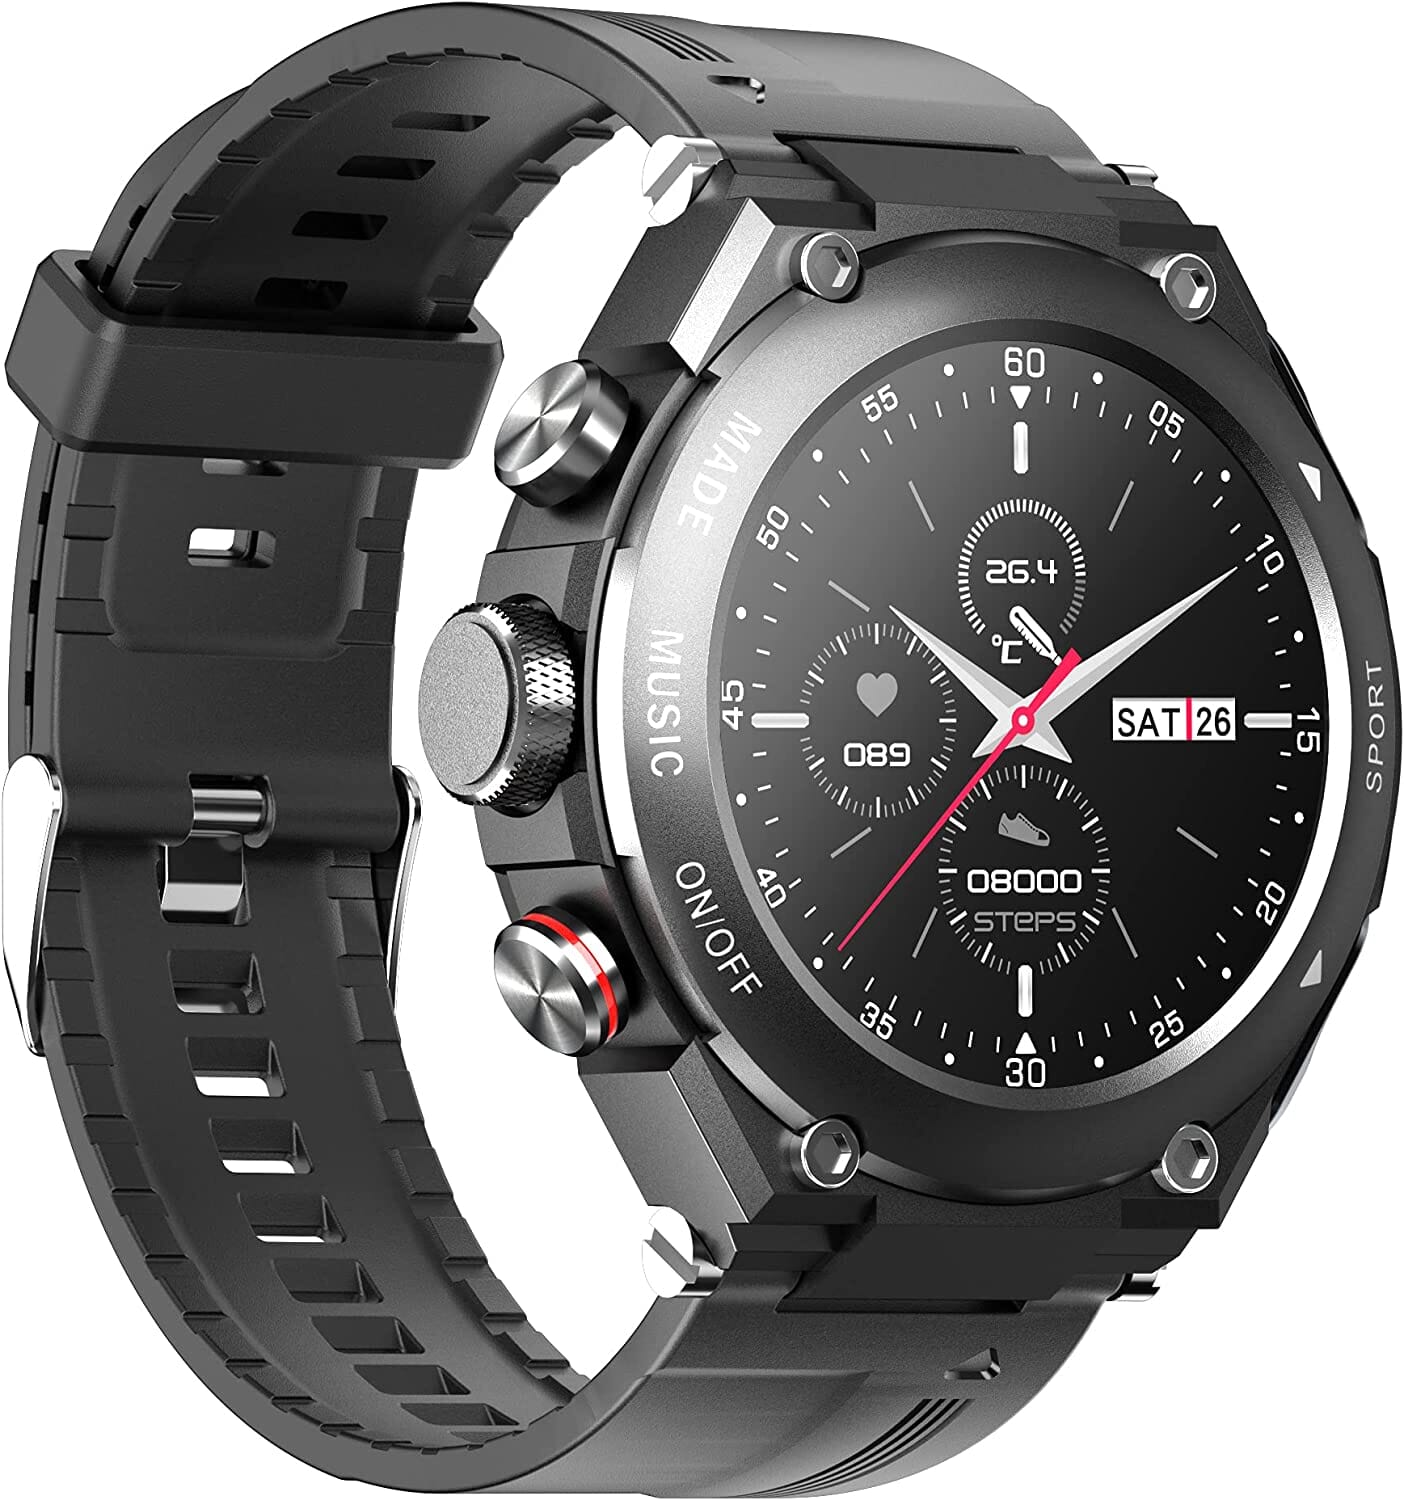 Horizon Pro Tactical Smartwatch – HorizonPro Smartwatch